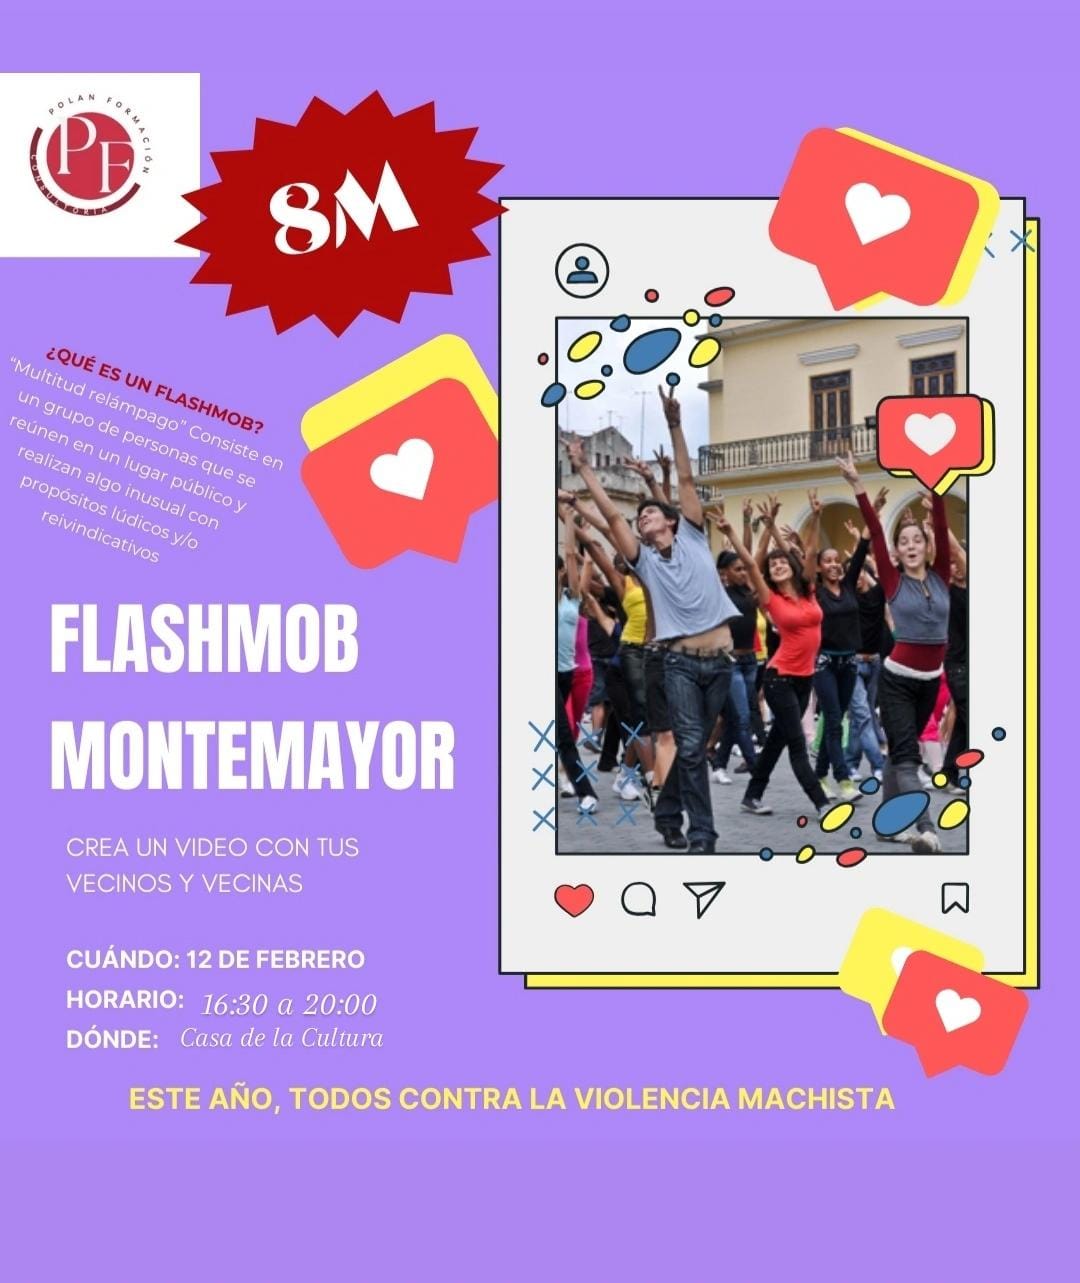 Flashmob 8M